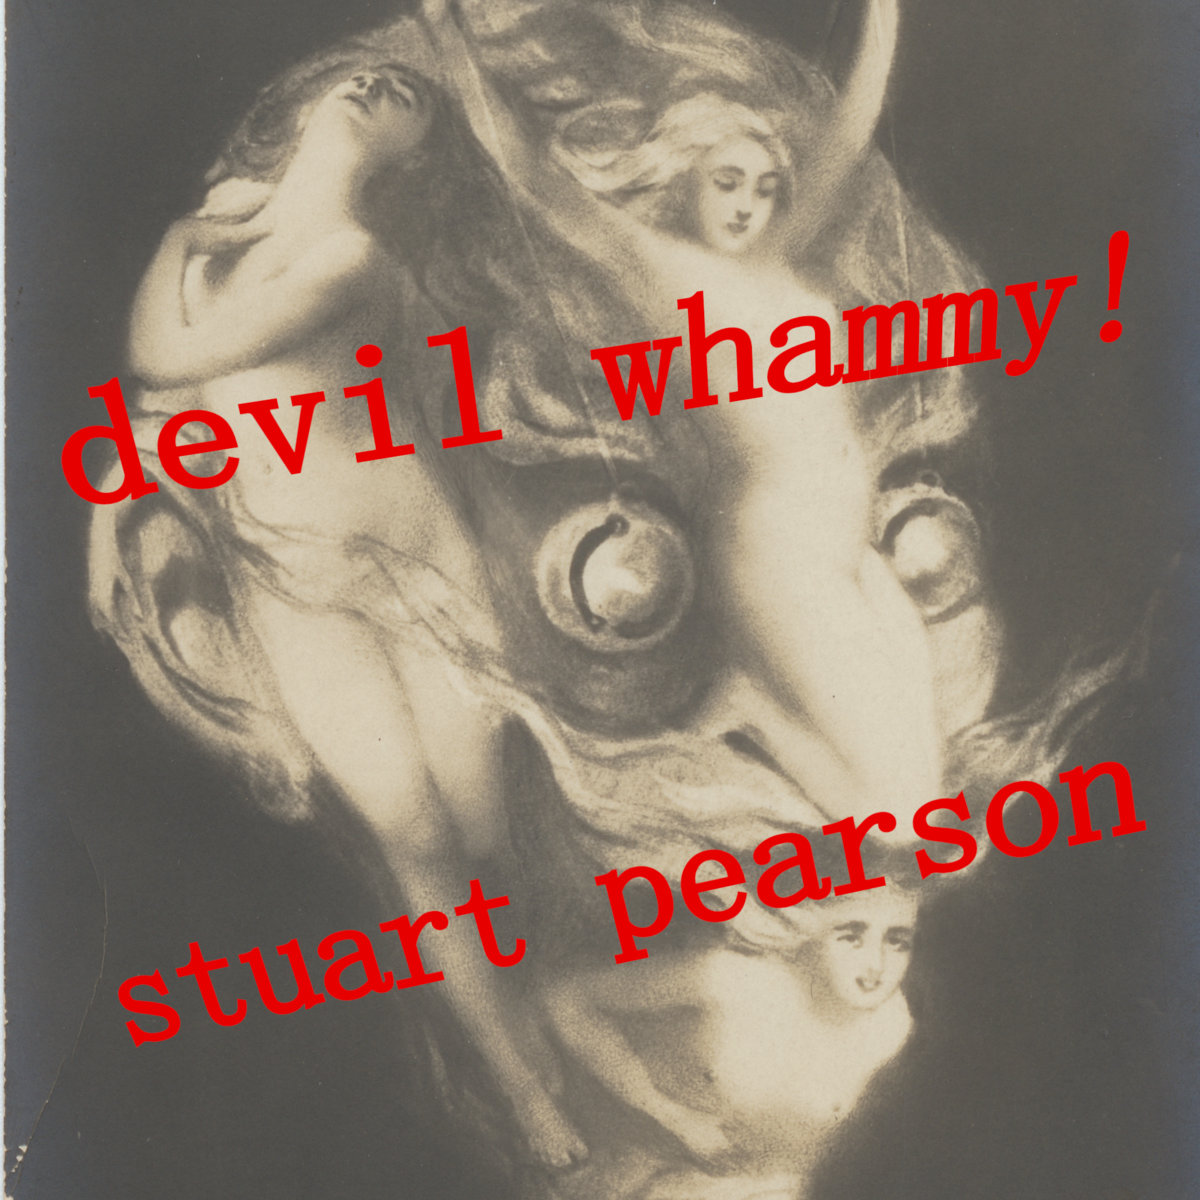 Stuart Pearson – “Devil Whammy”